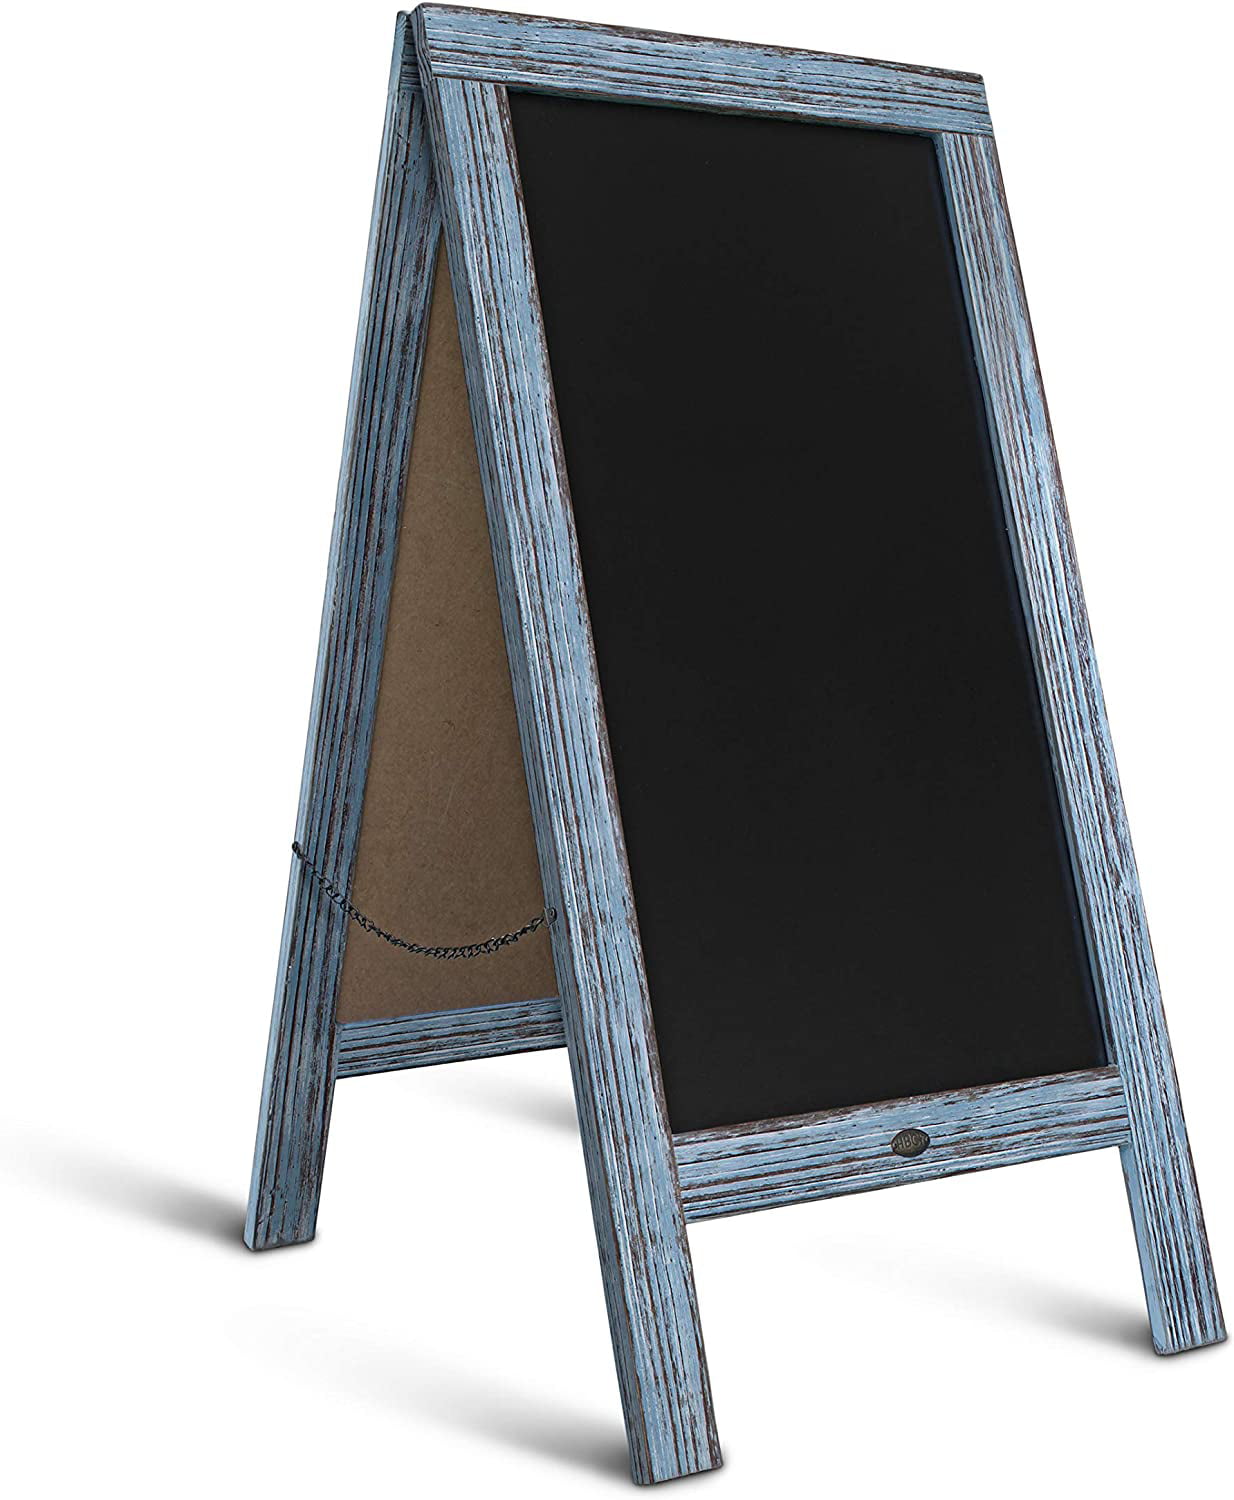 Rustic Vintage Blue A-Frame Chalkboard/Sidewalk Chalkboard Sign/Large 40 x 20 Sturdy Sandwich Board/A Frame Restaurant Message Board/Freestanding Wooden Menu Display Sign 